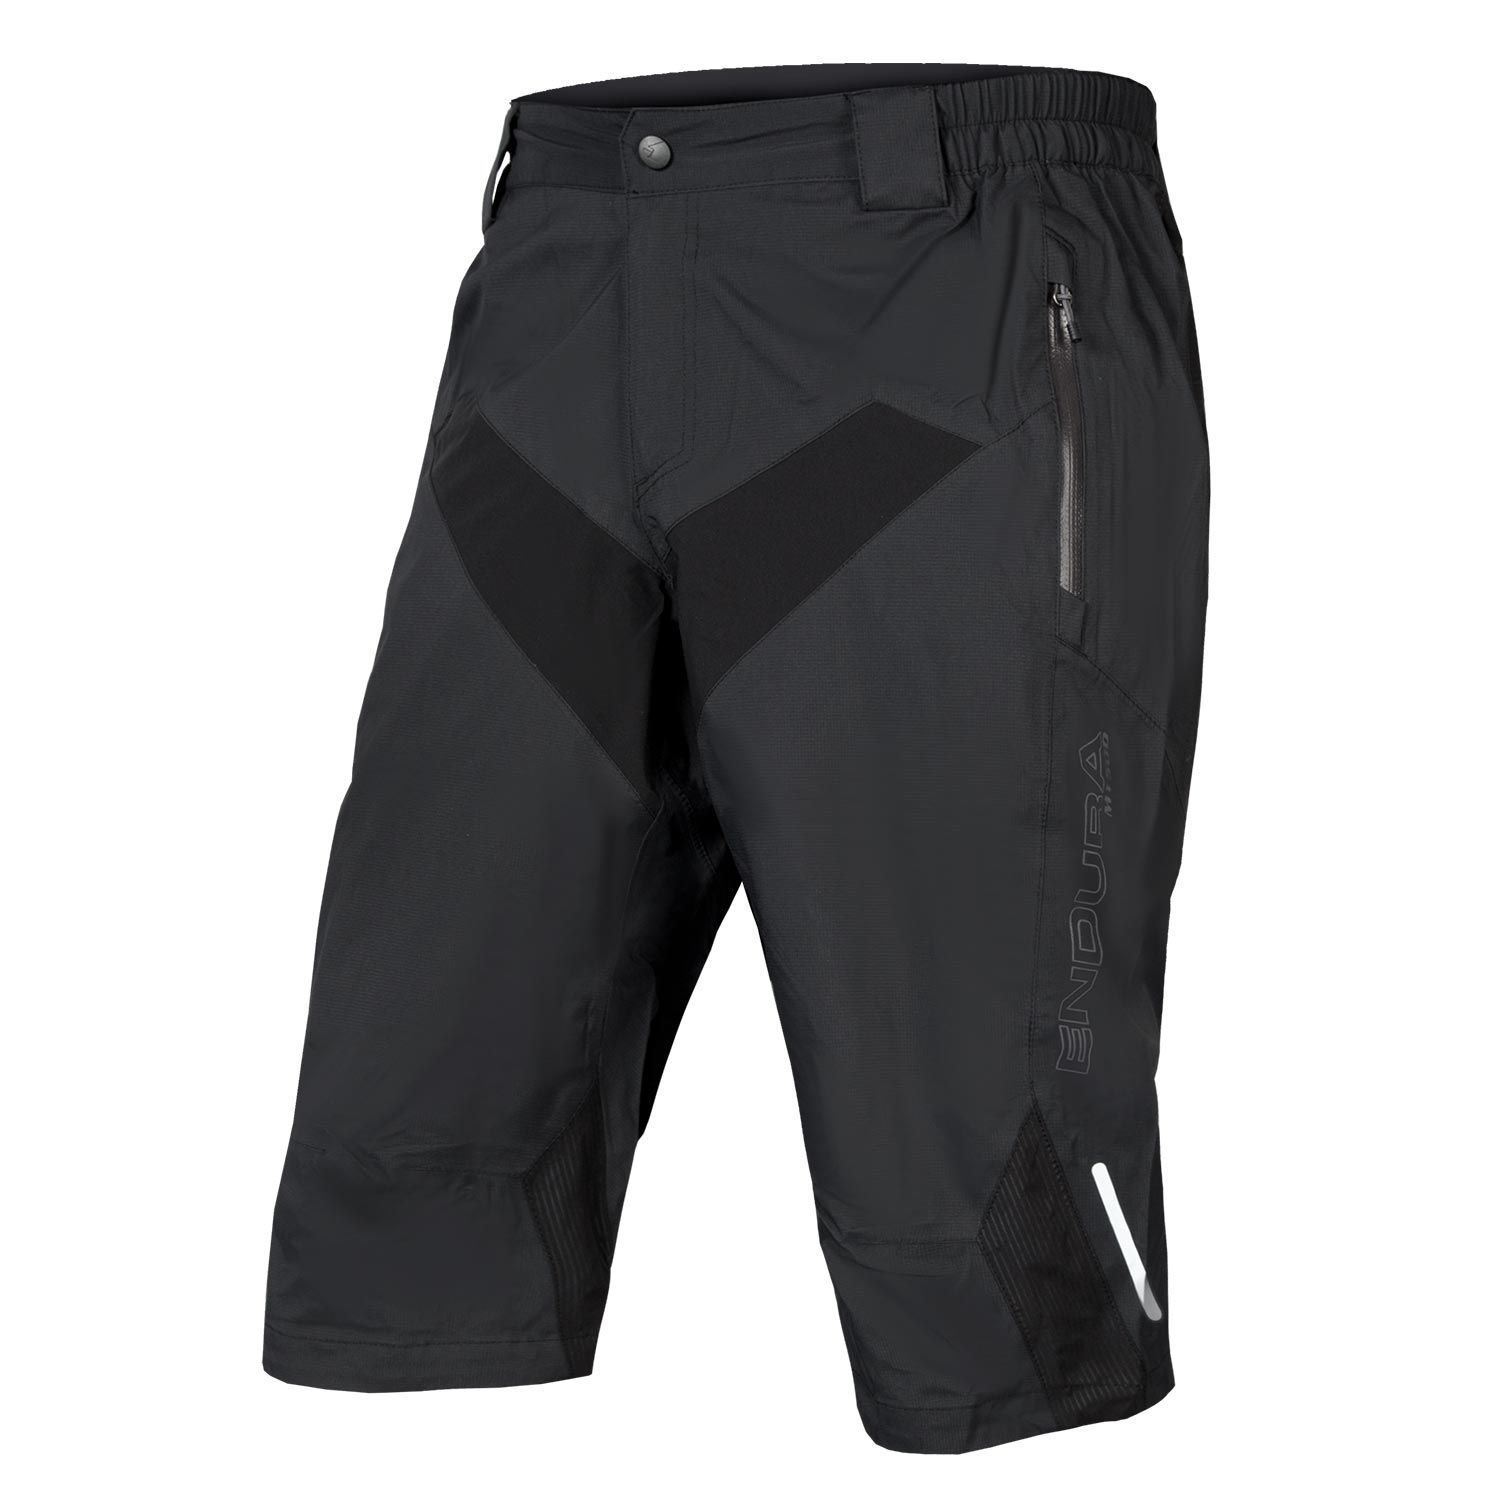 Endura Mt500 Waterproof Short - £69.99 | Shorts, Tights and Trousers ...